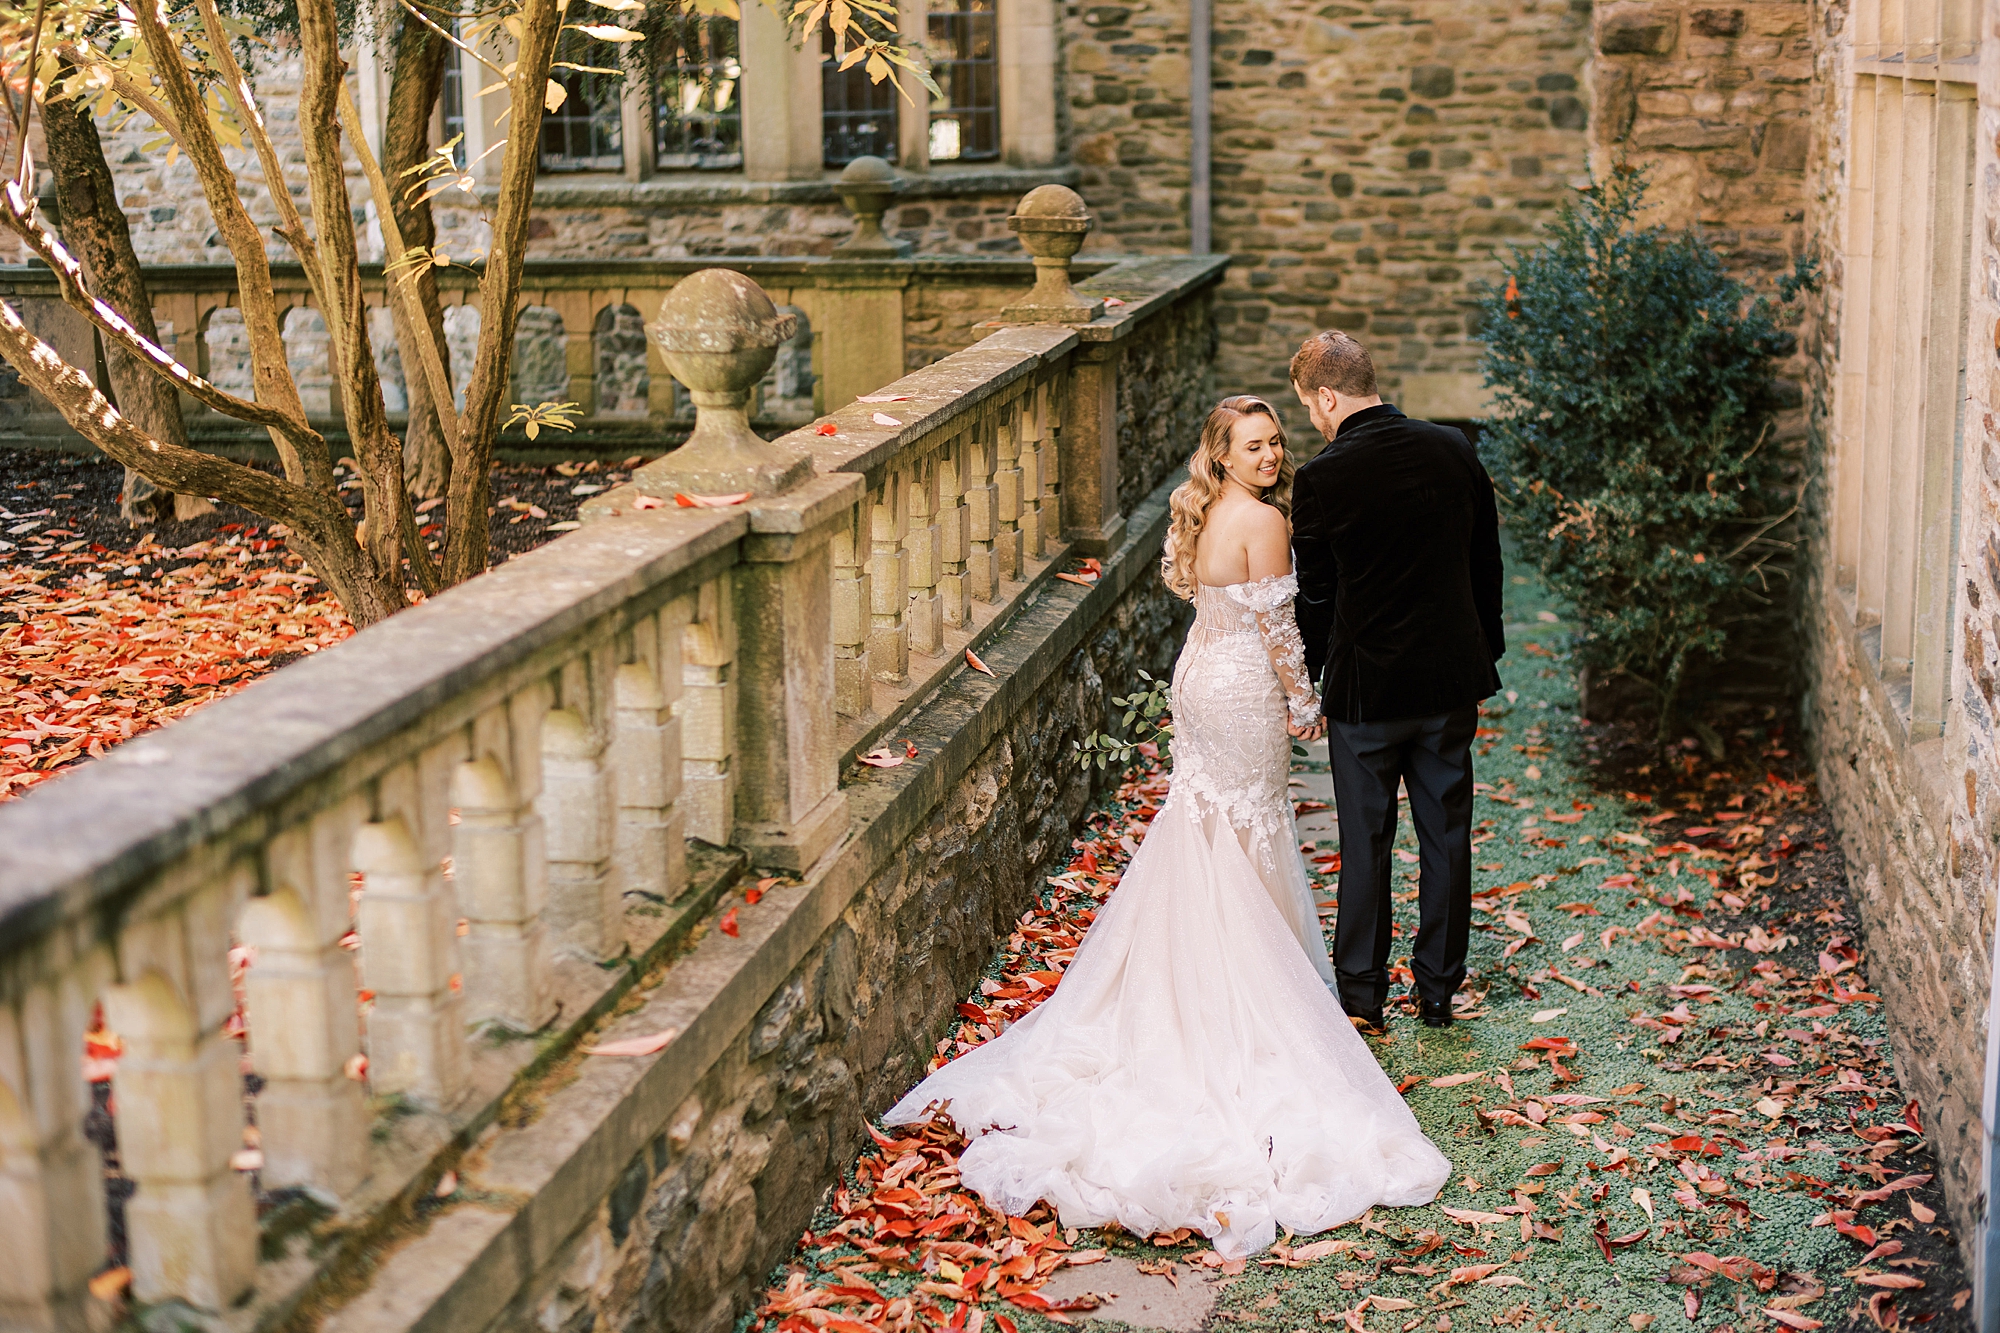 groom leans to whisper in bride's ear as they walk down stone walkway 